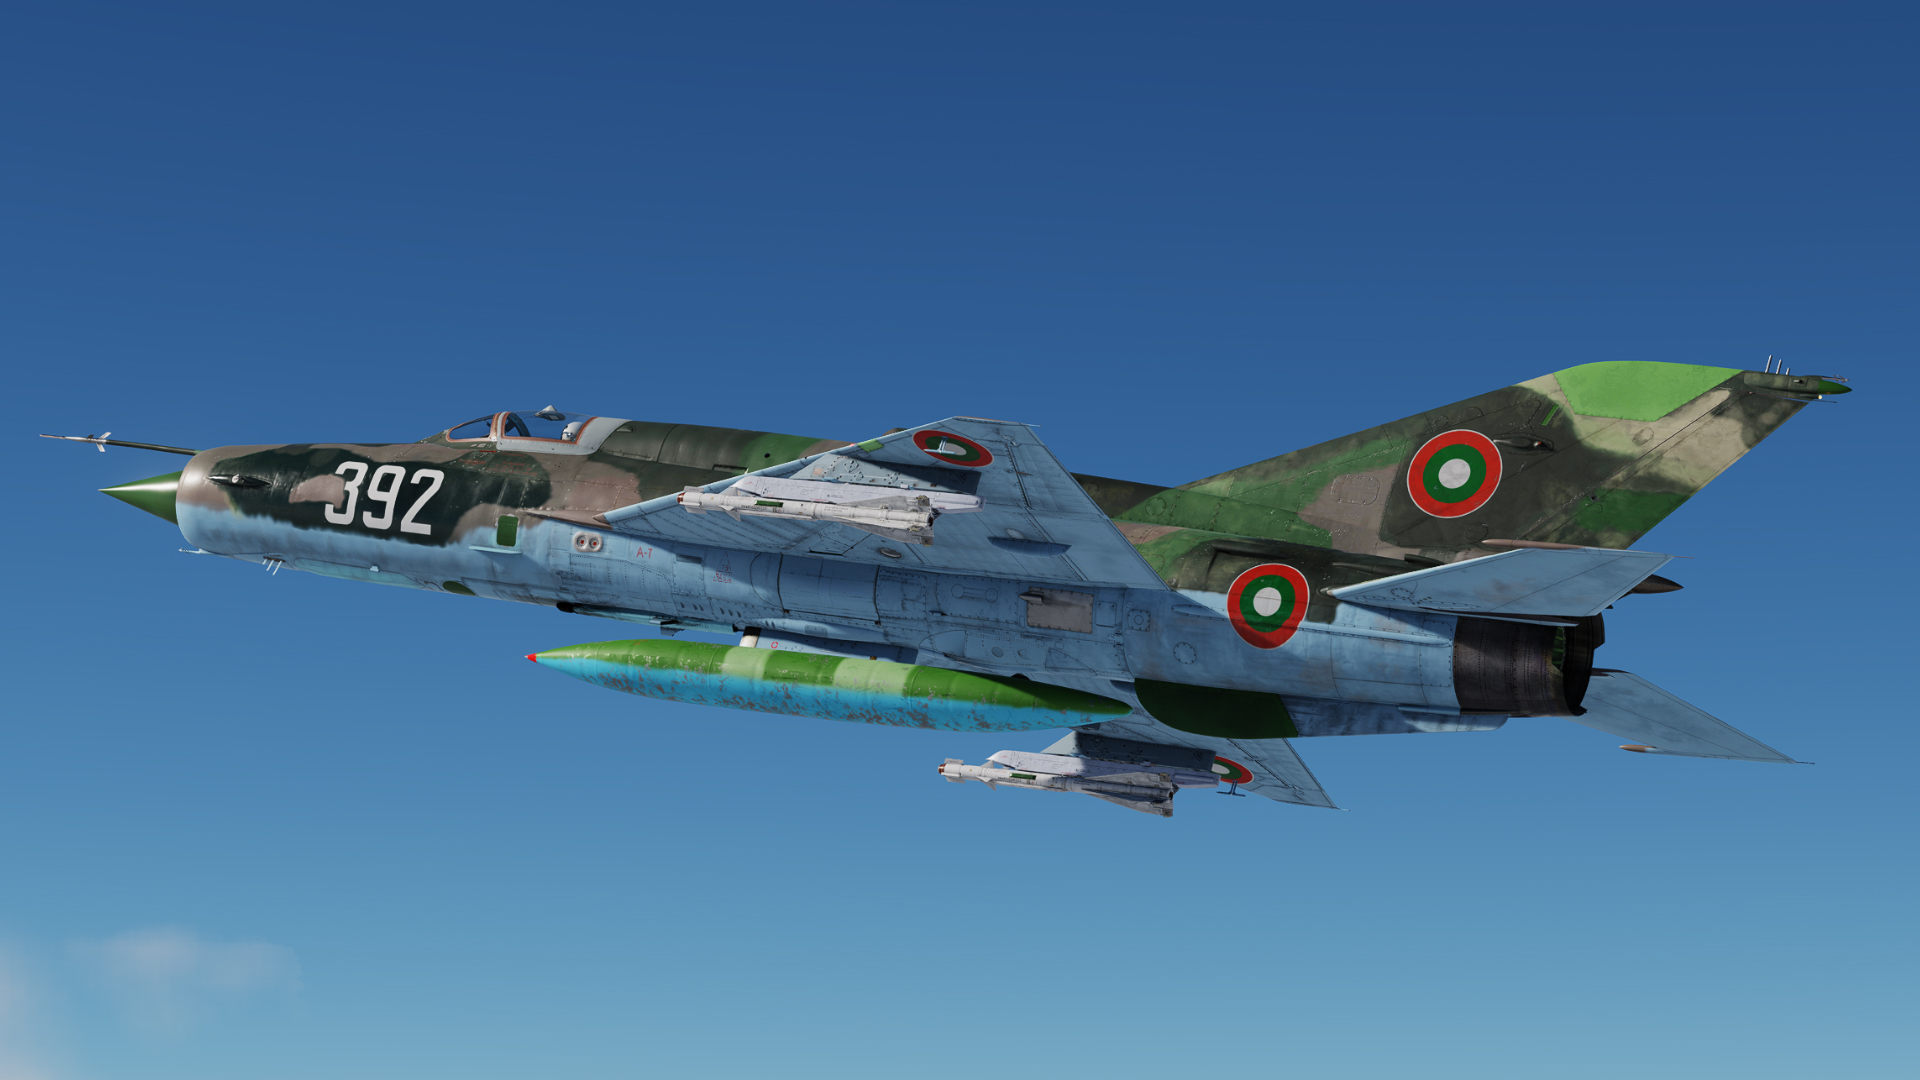 Bulgarian Air Force 392